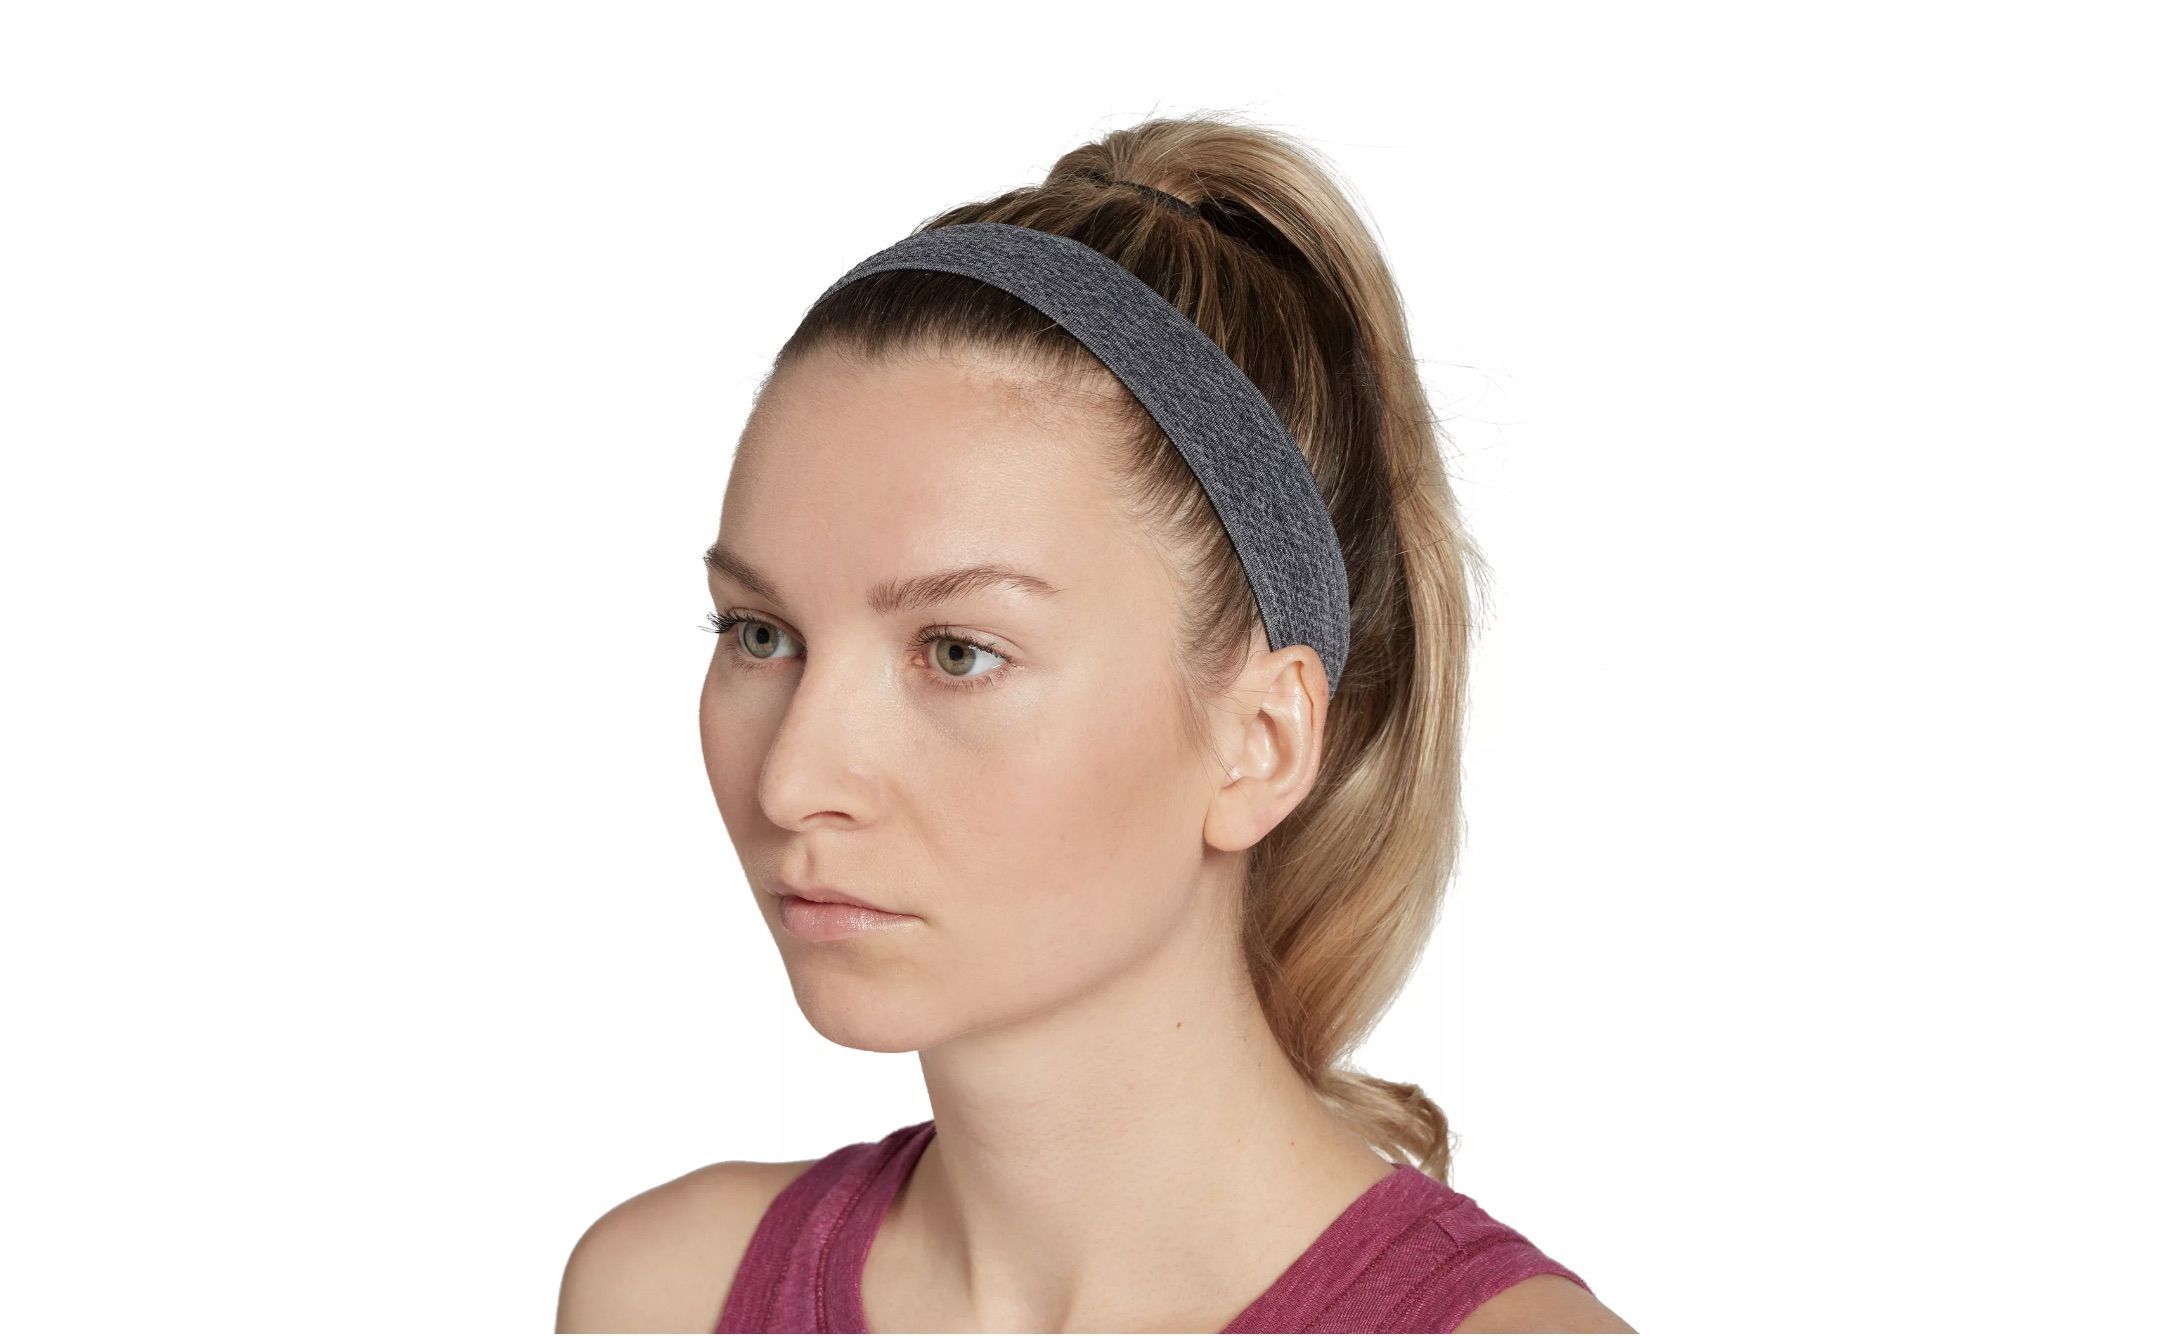 Yoga Headband Crossfit Running Headband Fitness Headband Workout Headband Adjustable Headband Neutral Lines Stretchy Knit